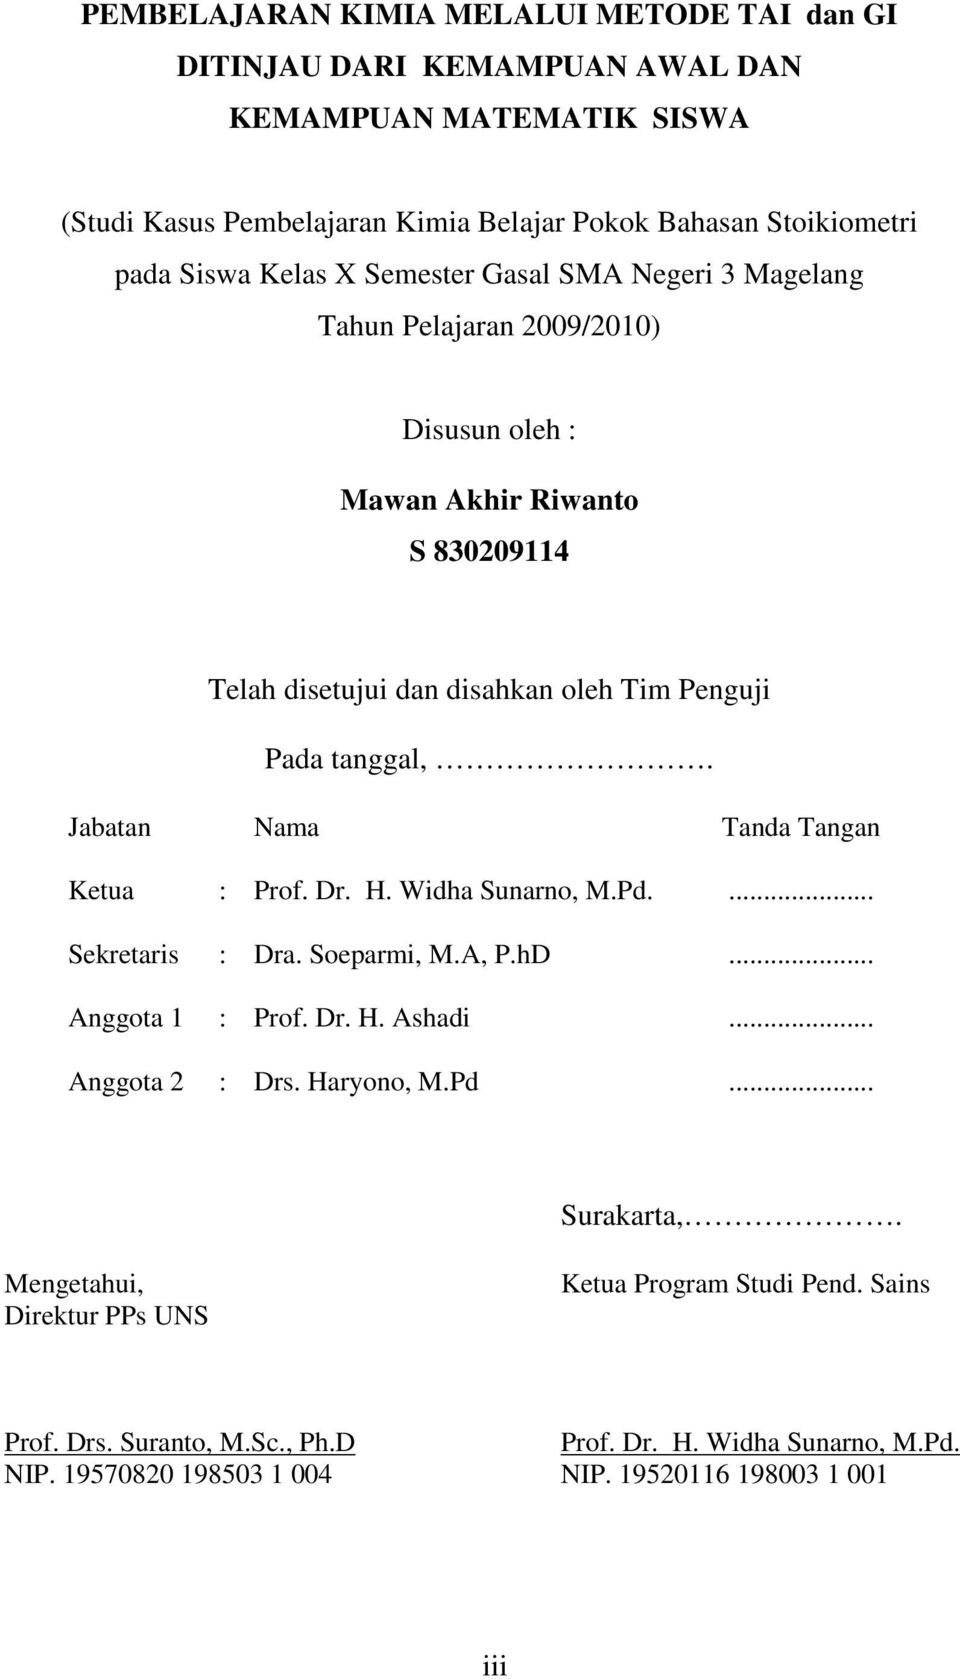 Jabatan Nama Tanda Tangan Ketua : Prof. Dr. H. Widha Sunarno, M.Pd.... Sekretaris : Dra. Soeparmi, M.A, P.hD... Anggota 1 : Prof. Dr. H. Ashadi... Anggota 2 : Drs. Haryono, M.Pd... Surakarta,.